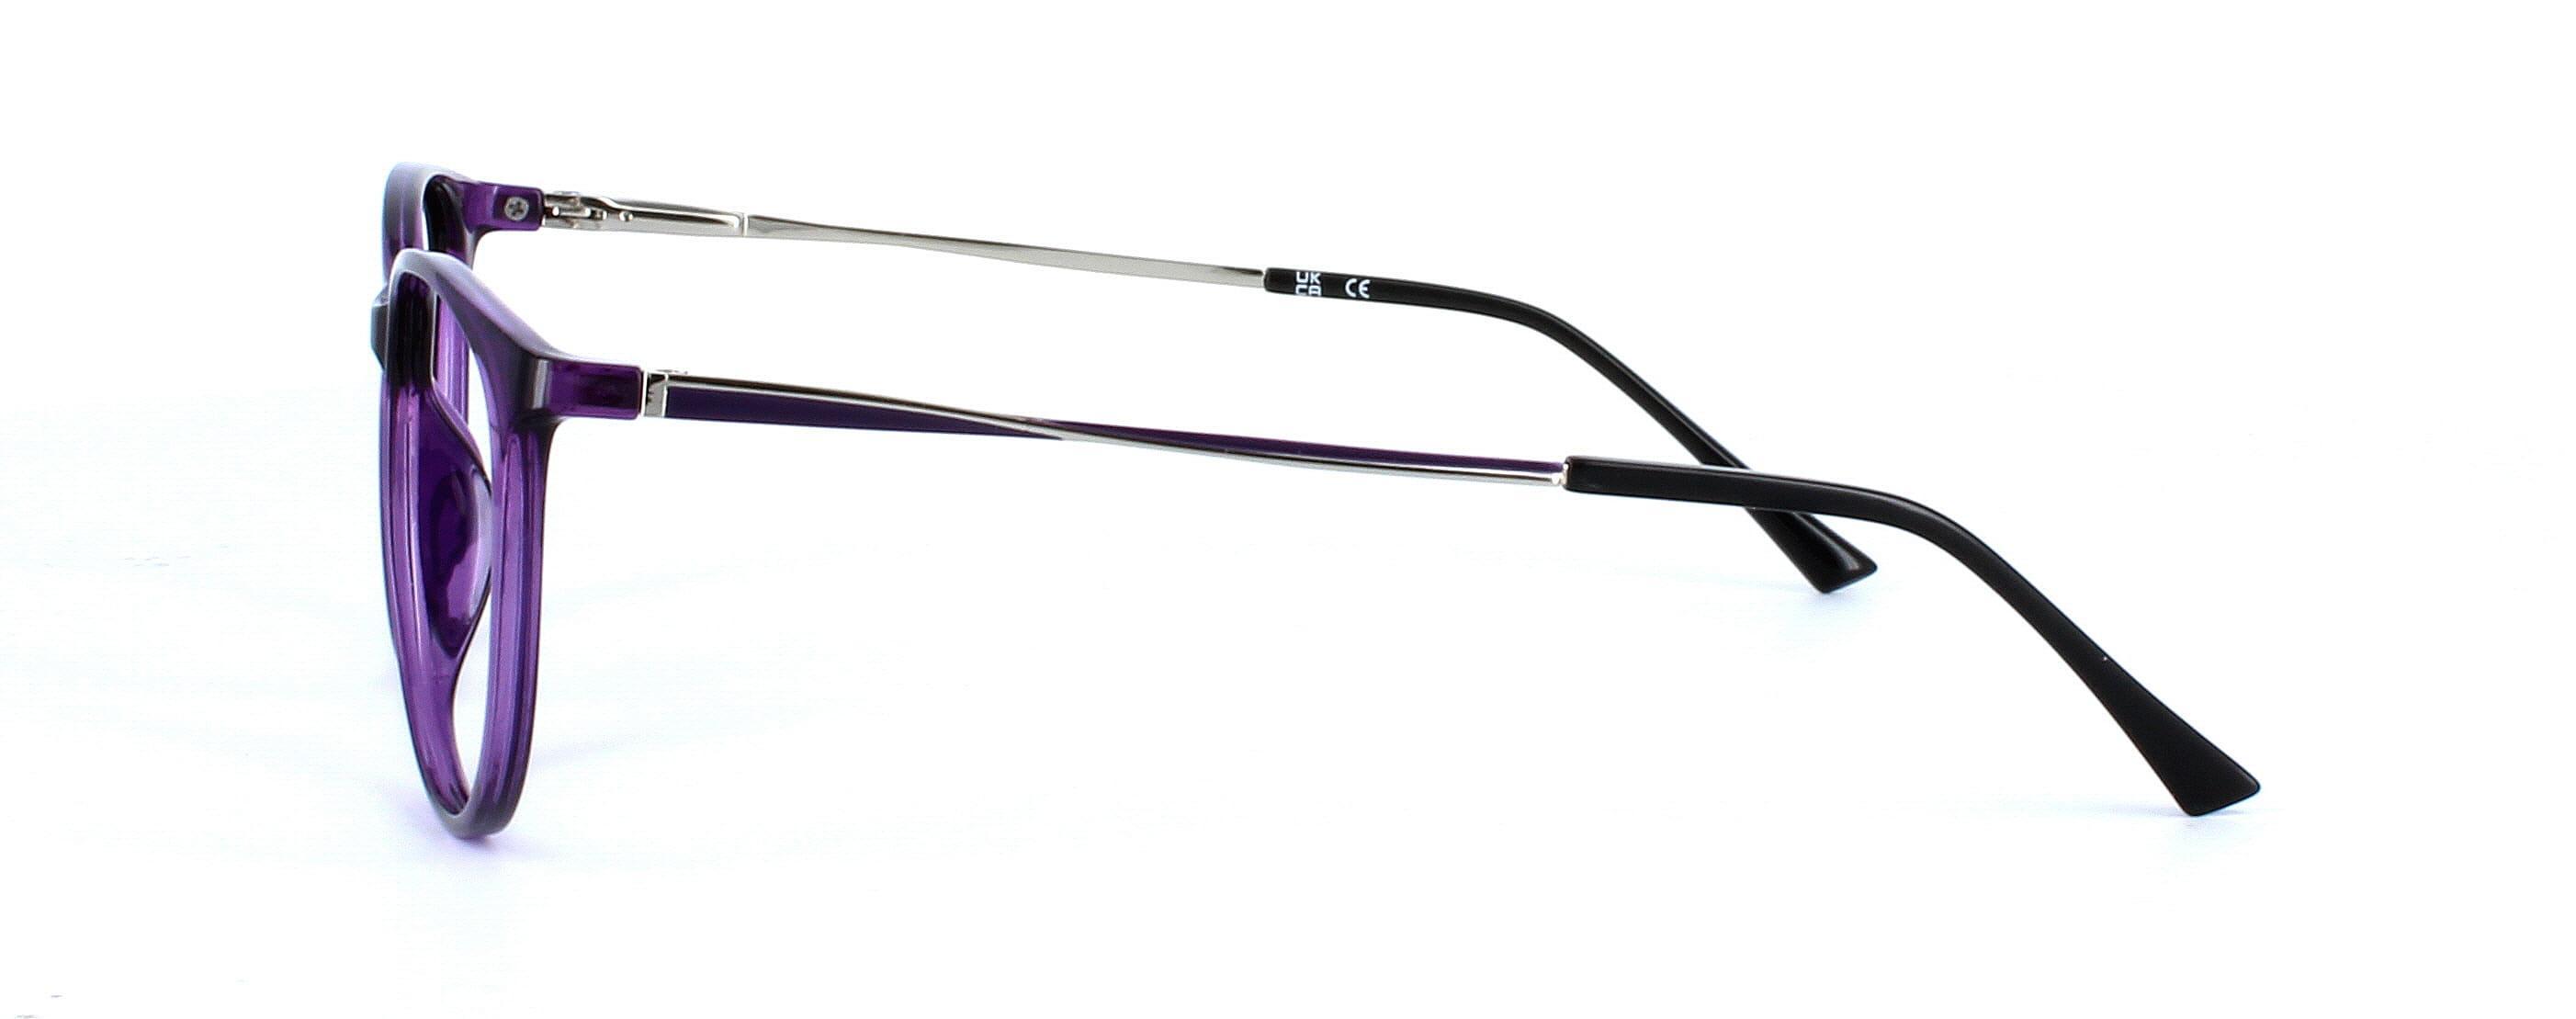 Aquila - Ladies plastic glasses frame in purple - image view 2